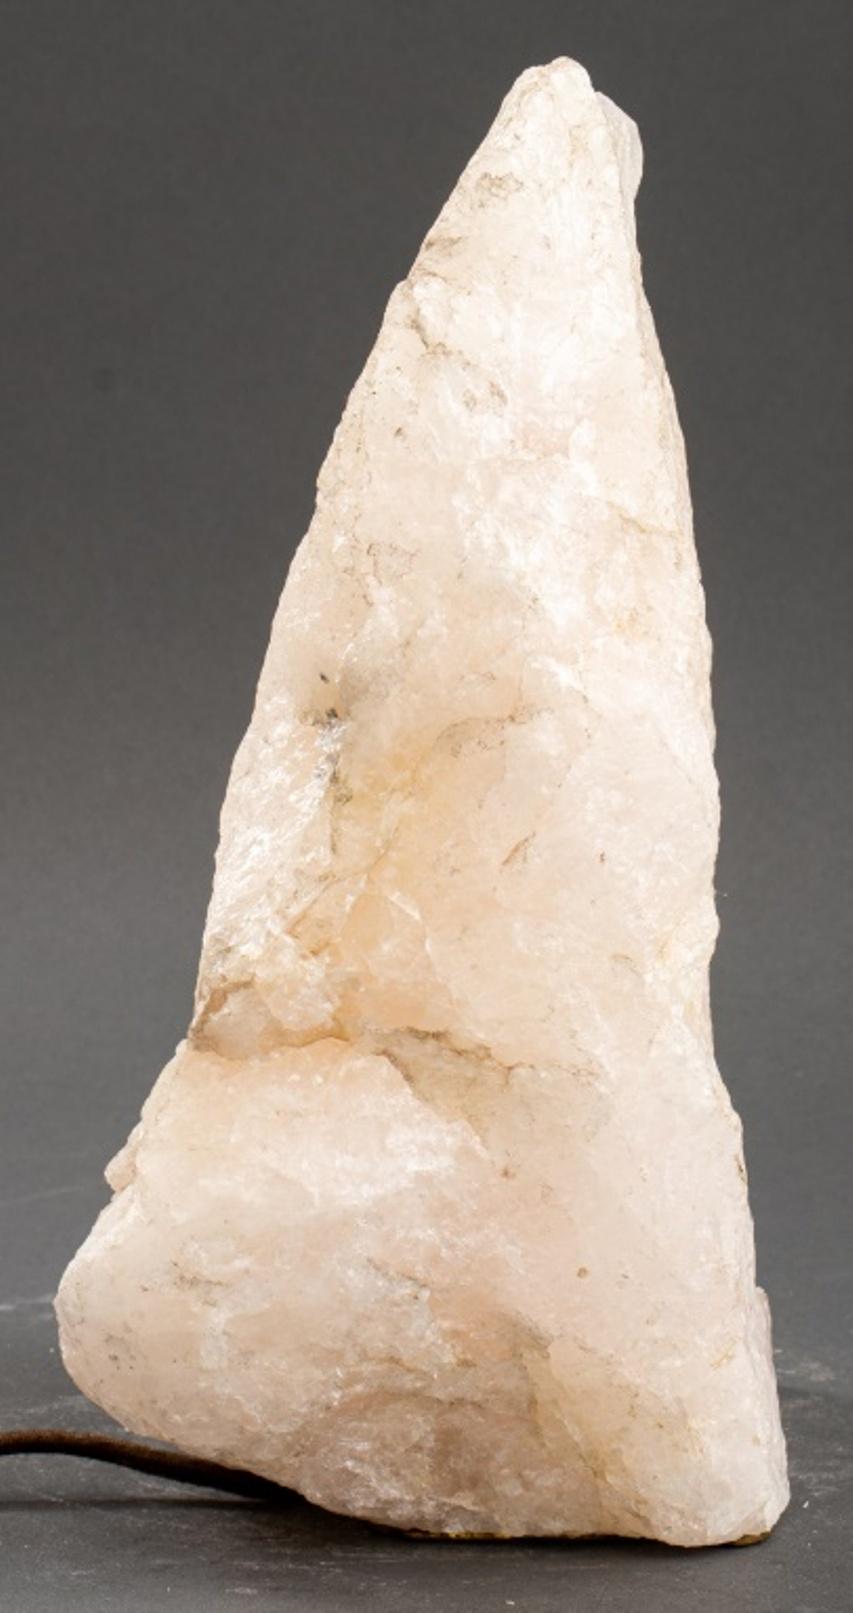 Rustic White Quartzite Mineral Specimen Mounted as a Lamp